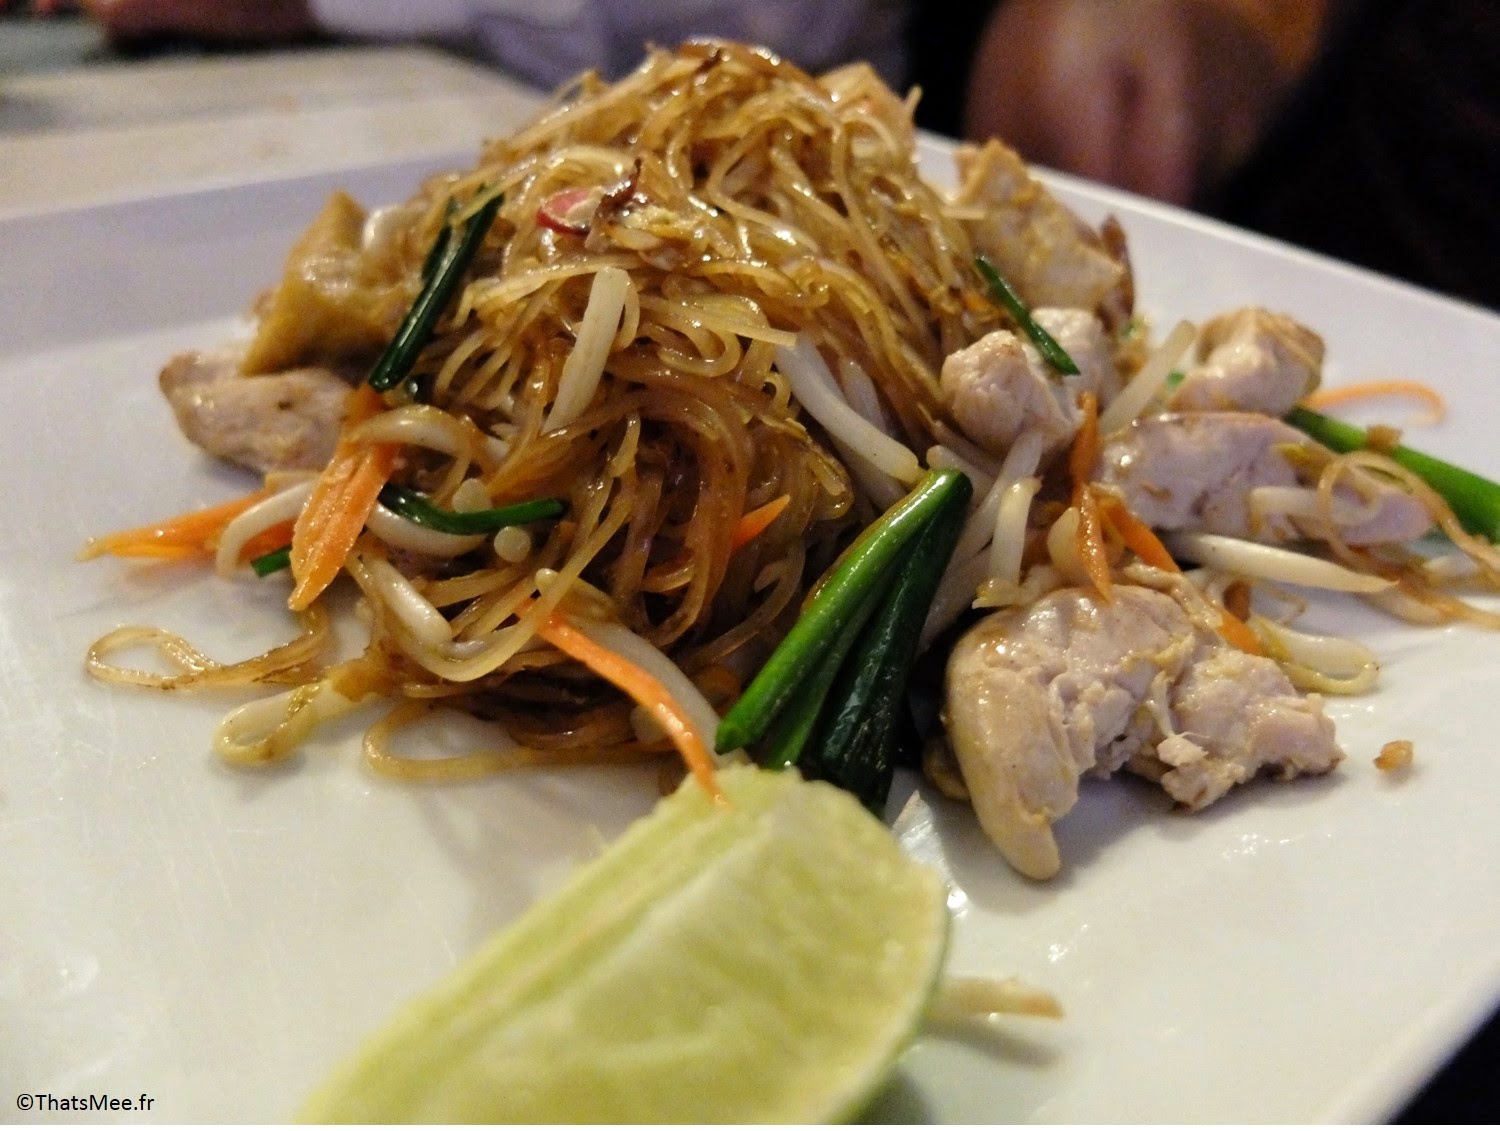 Thai Spices resto Cantine Thaï Paris pad thai plat typique thailandais, cuisine thailandaise gastronomie pad thai